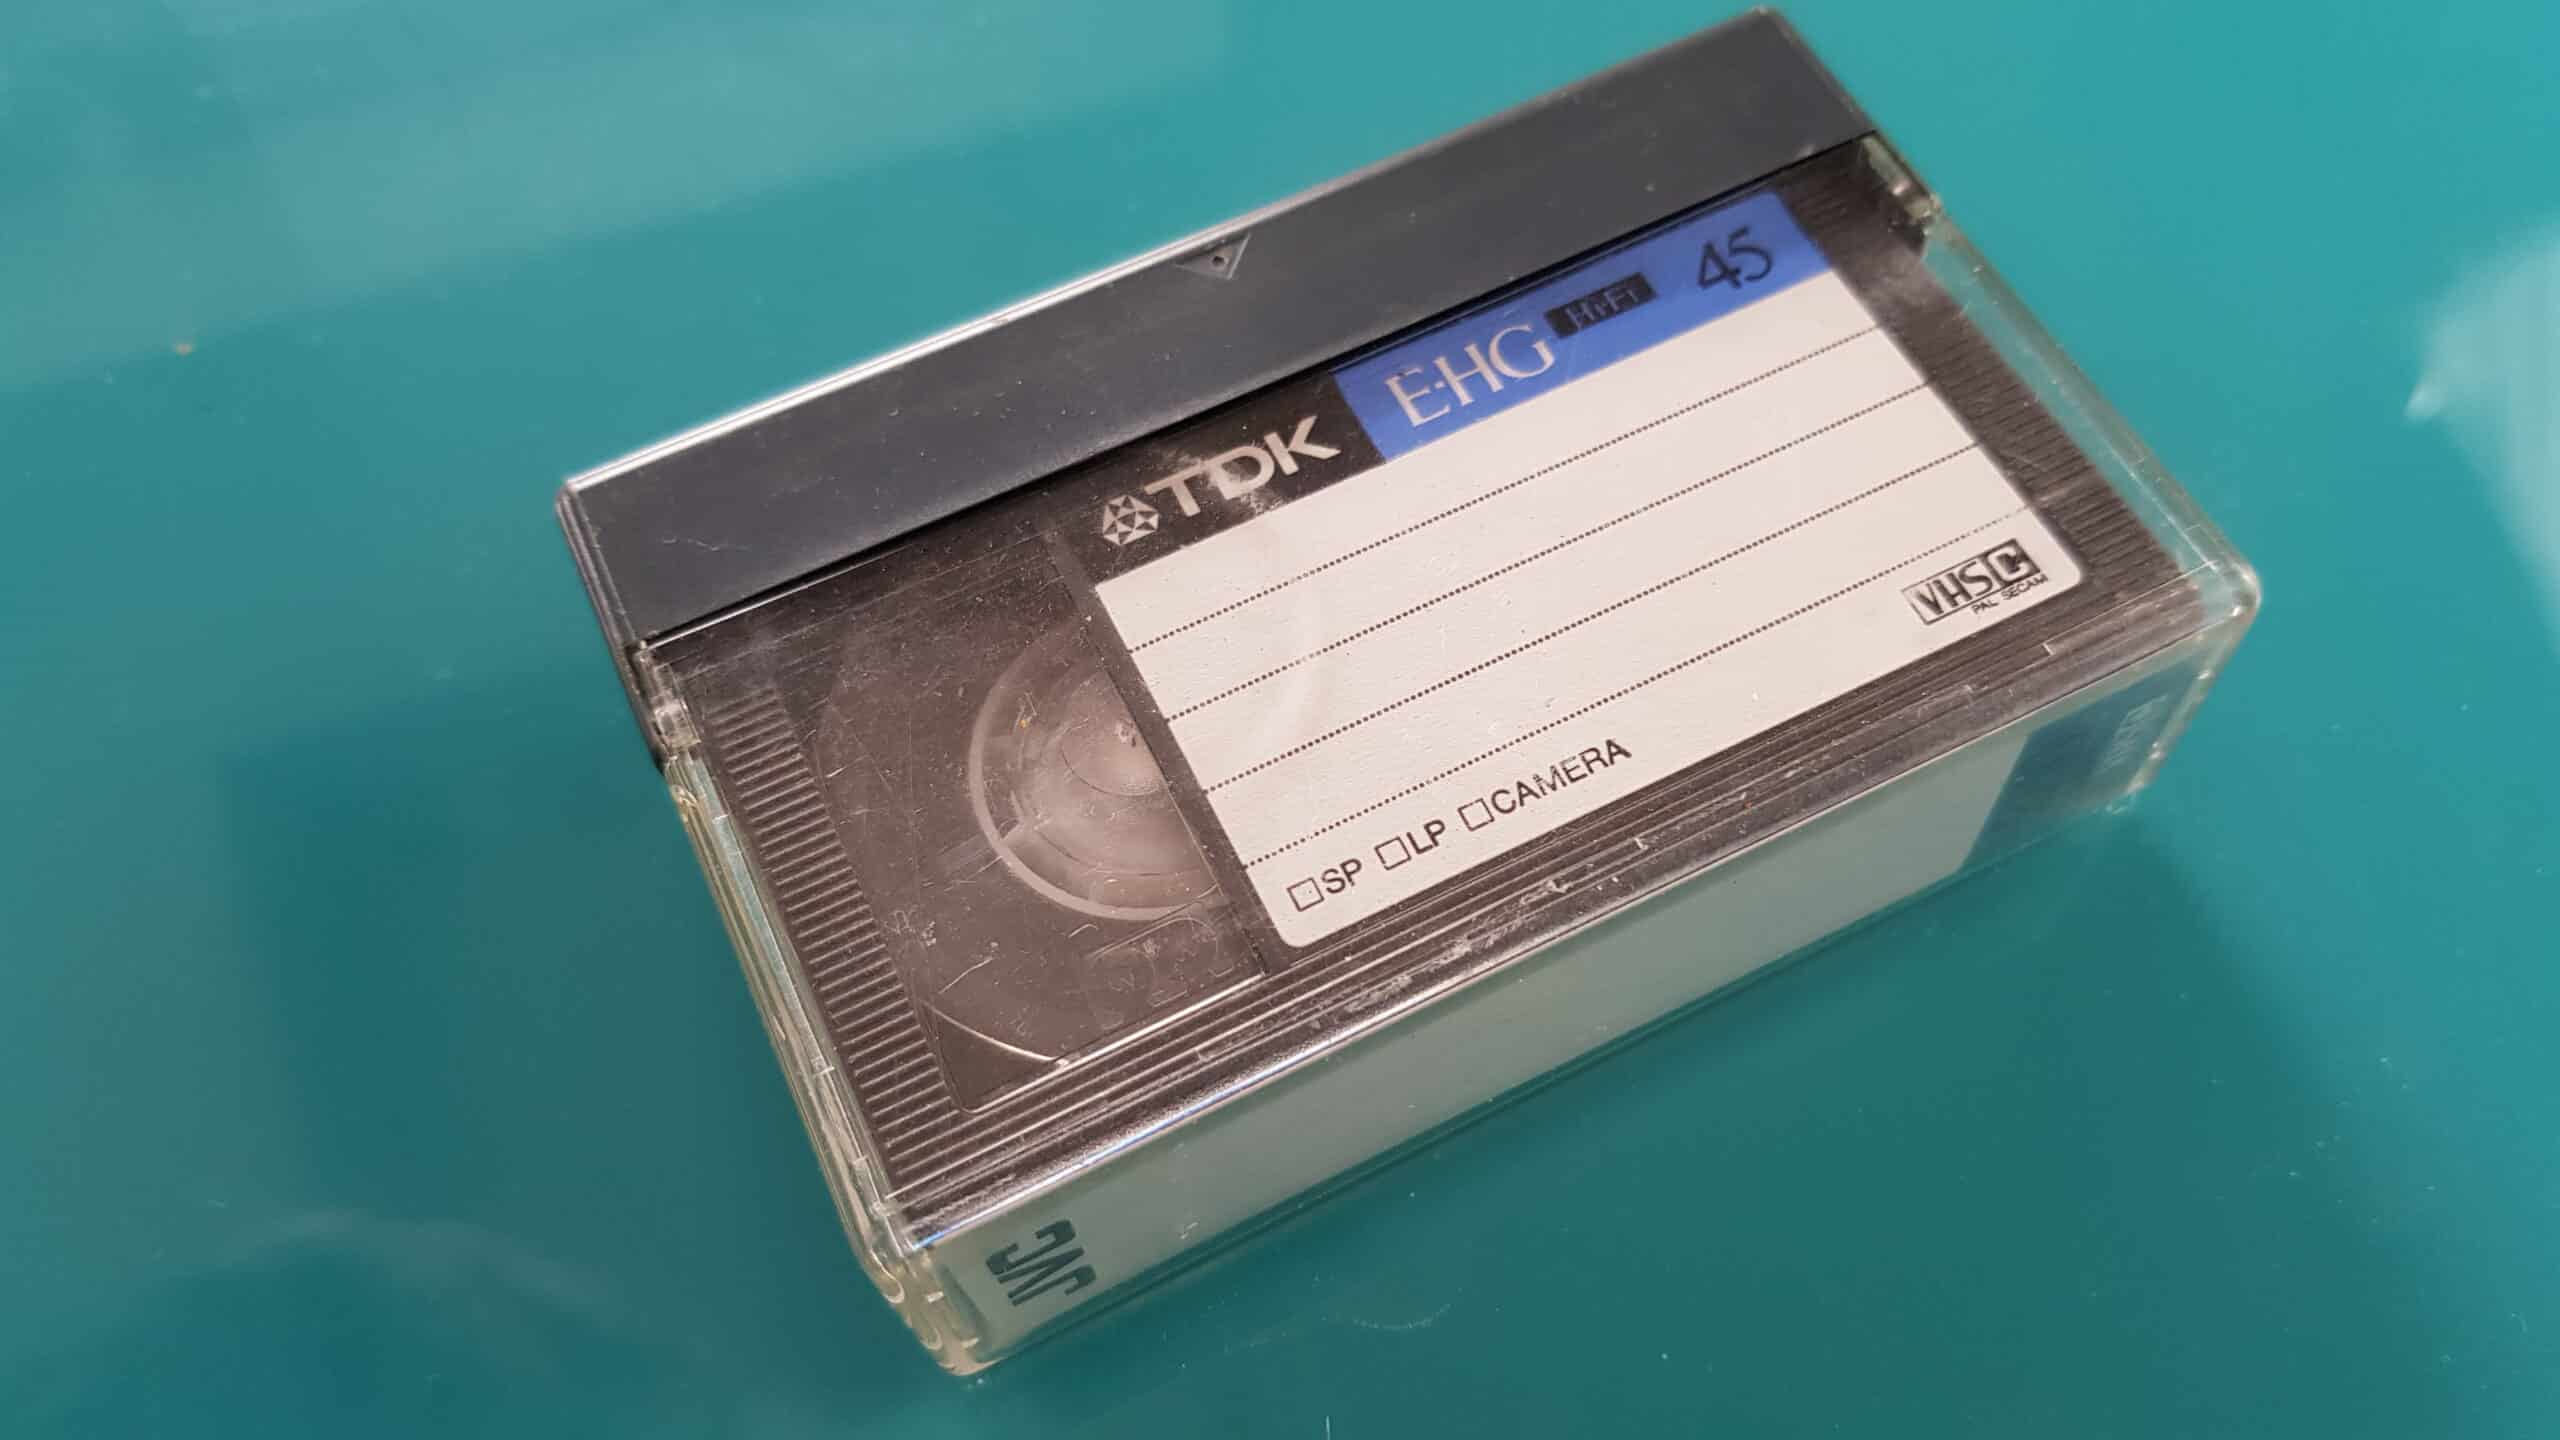 Analogue video cassette